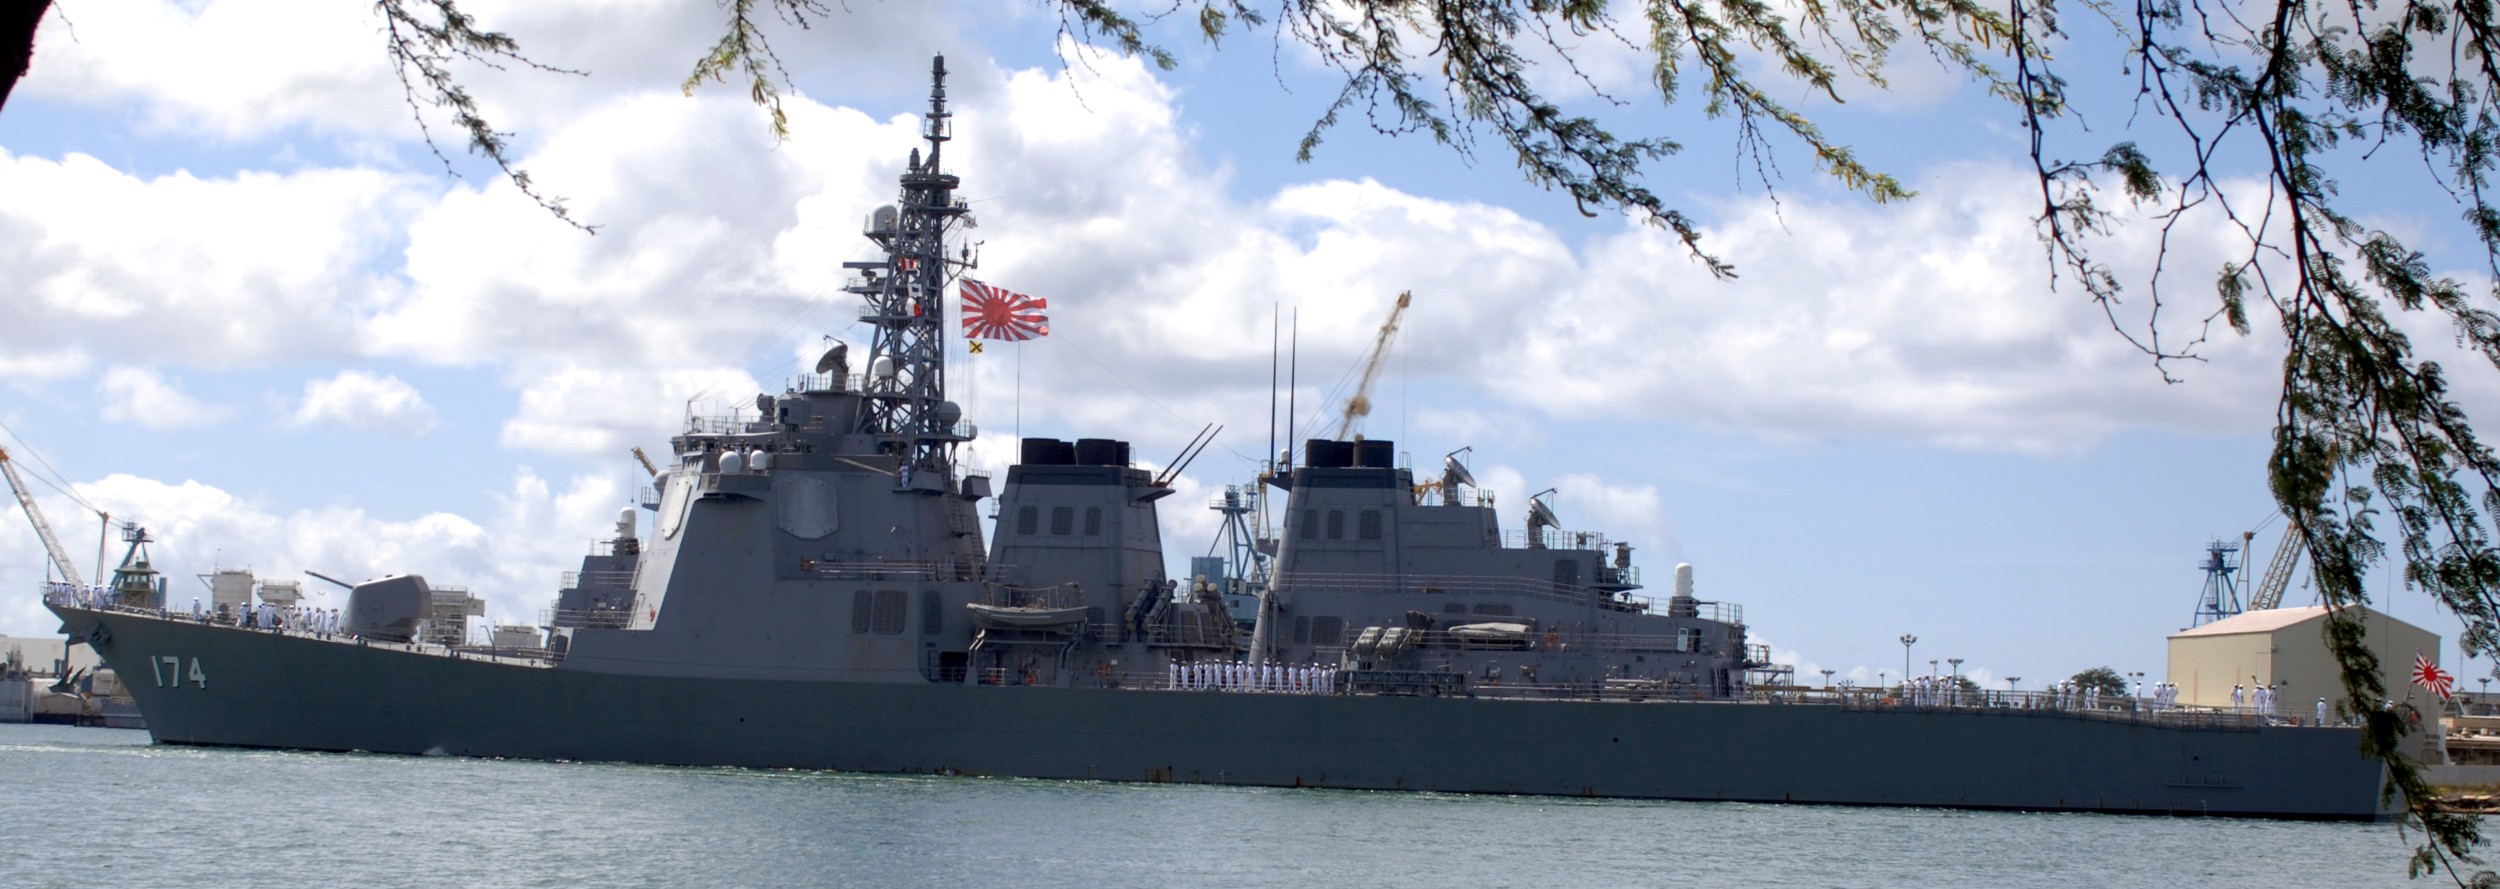 ddg-174 js kirishima kongo class guided missile destroyer aegis japan maritime self defense force jmsdf 28